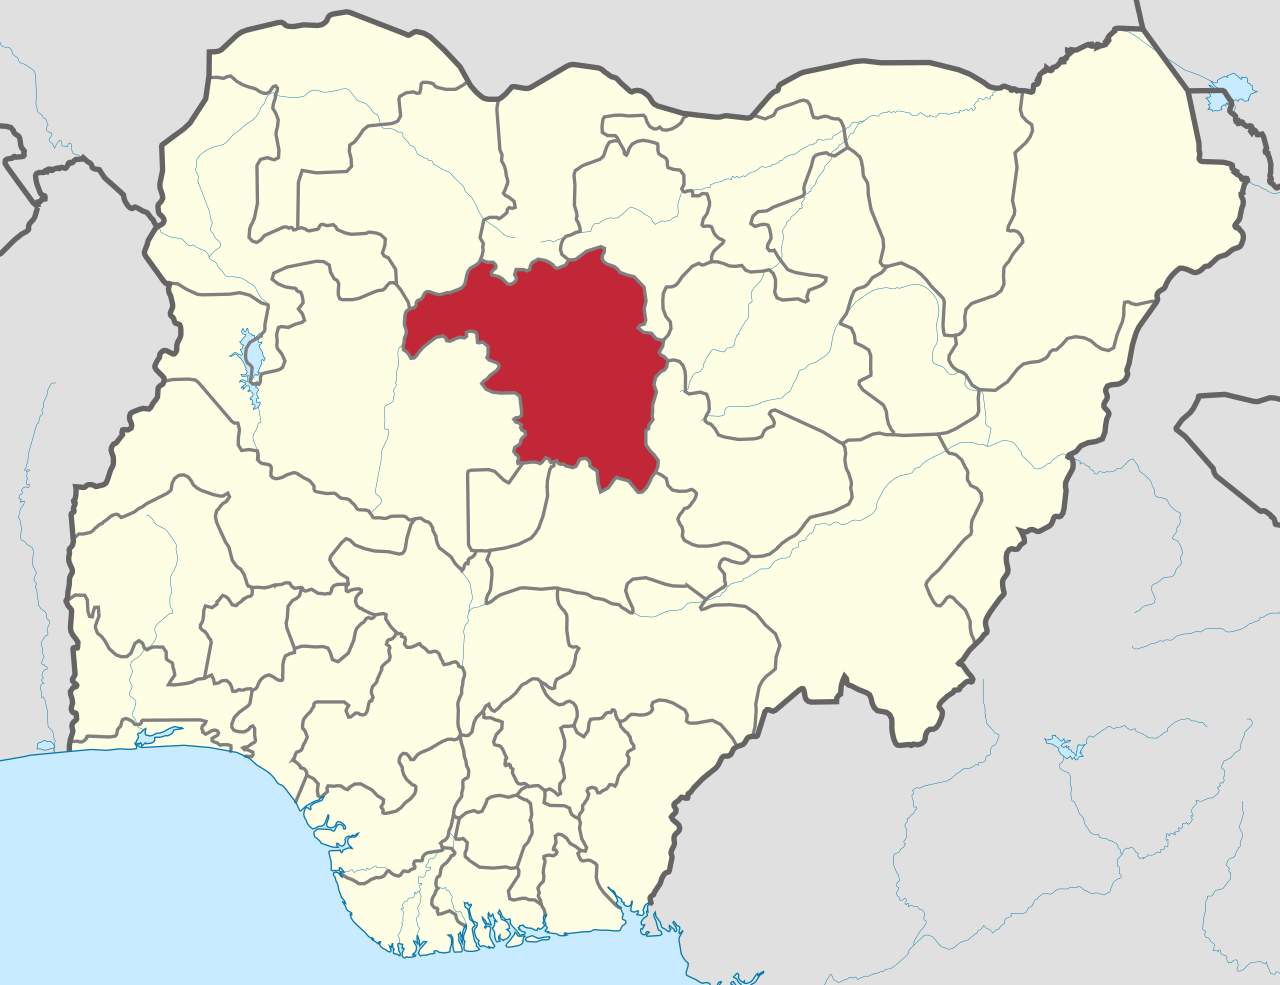 40 Christians killed in attacks in Nigeria